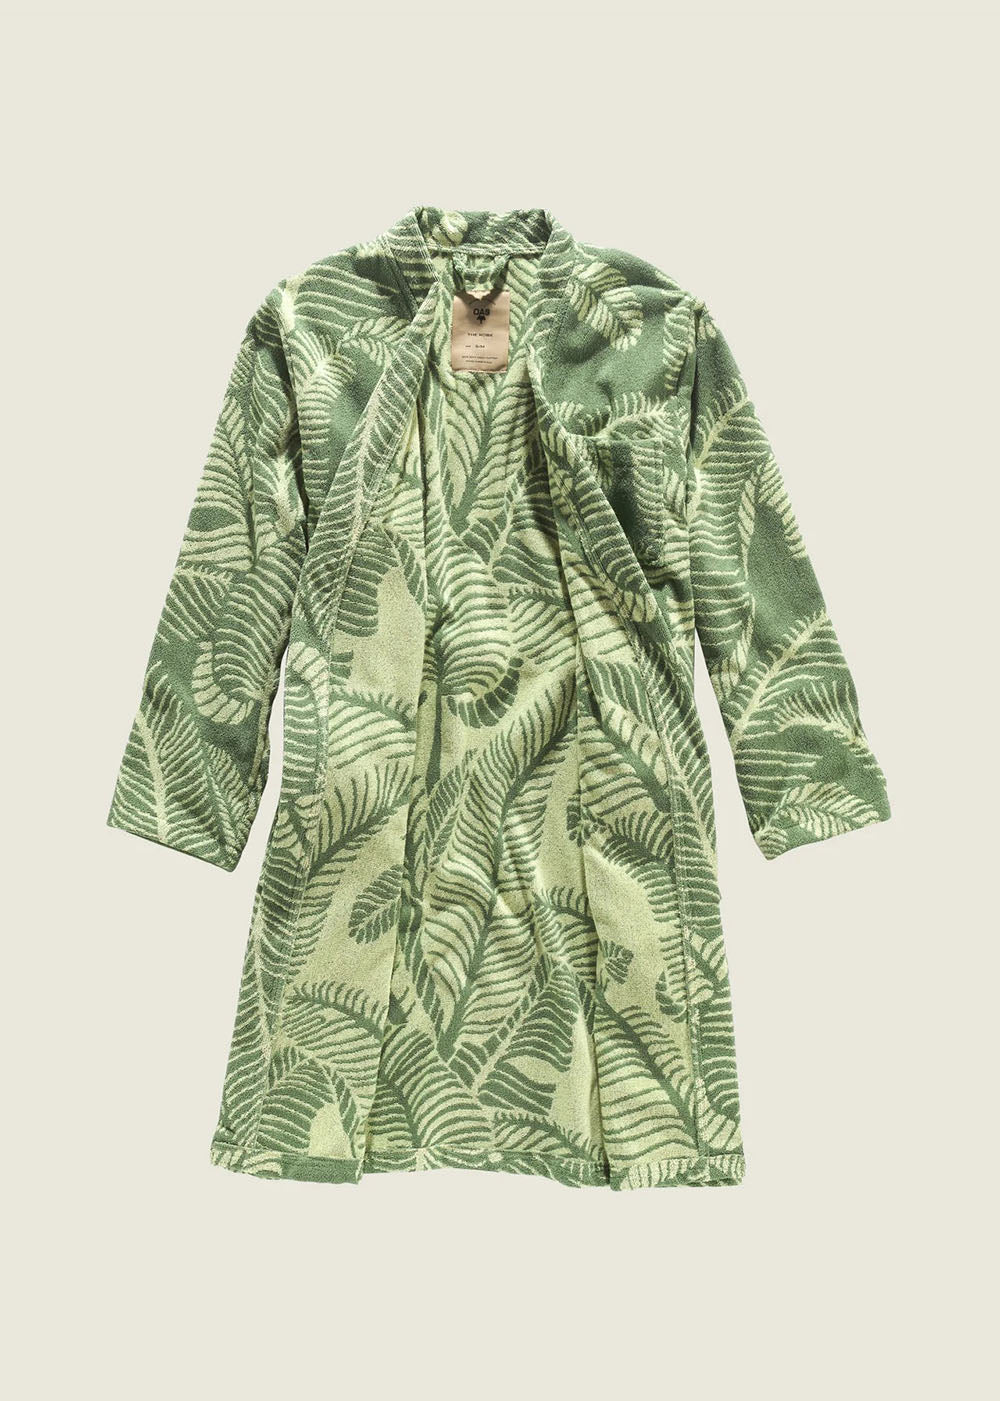 Banana Leaf Robe - Green - OAS Company Canada - Danali - 8002-05